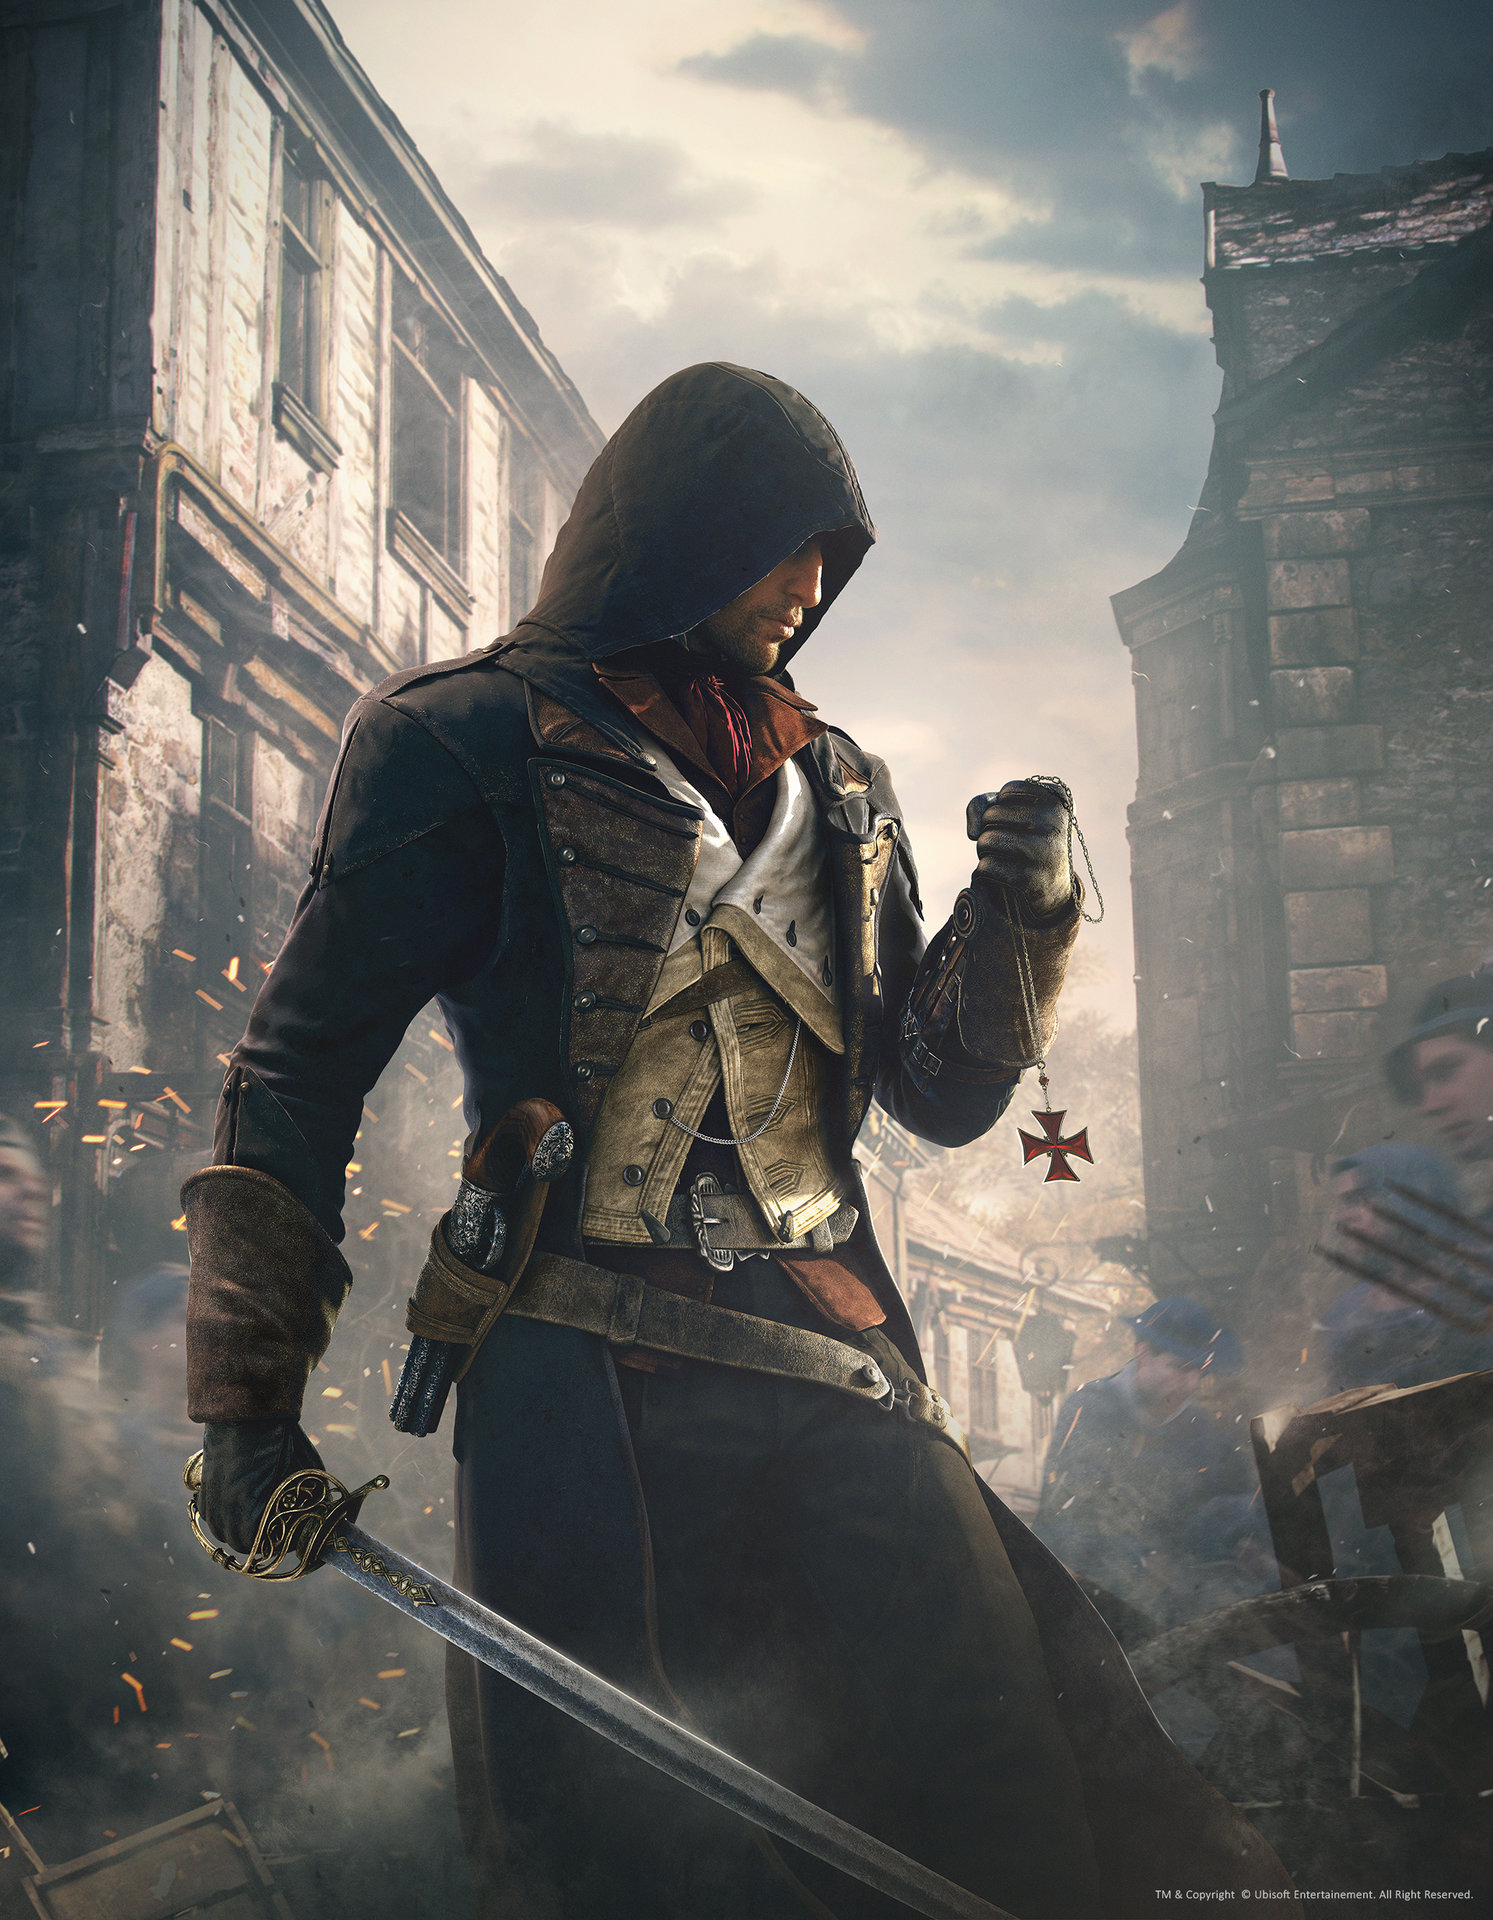 Assassins Creed Unity Wallpaper by DanteArtWallpapers on DeviantArt